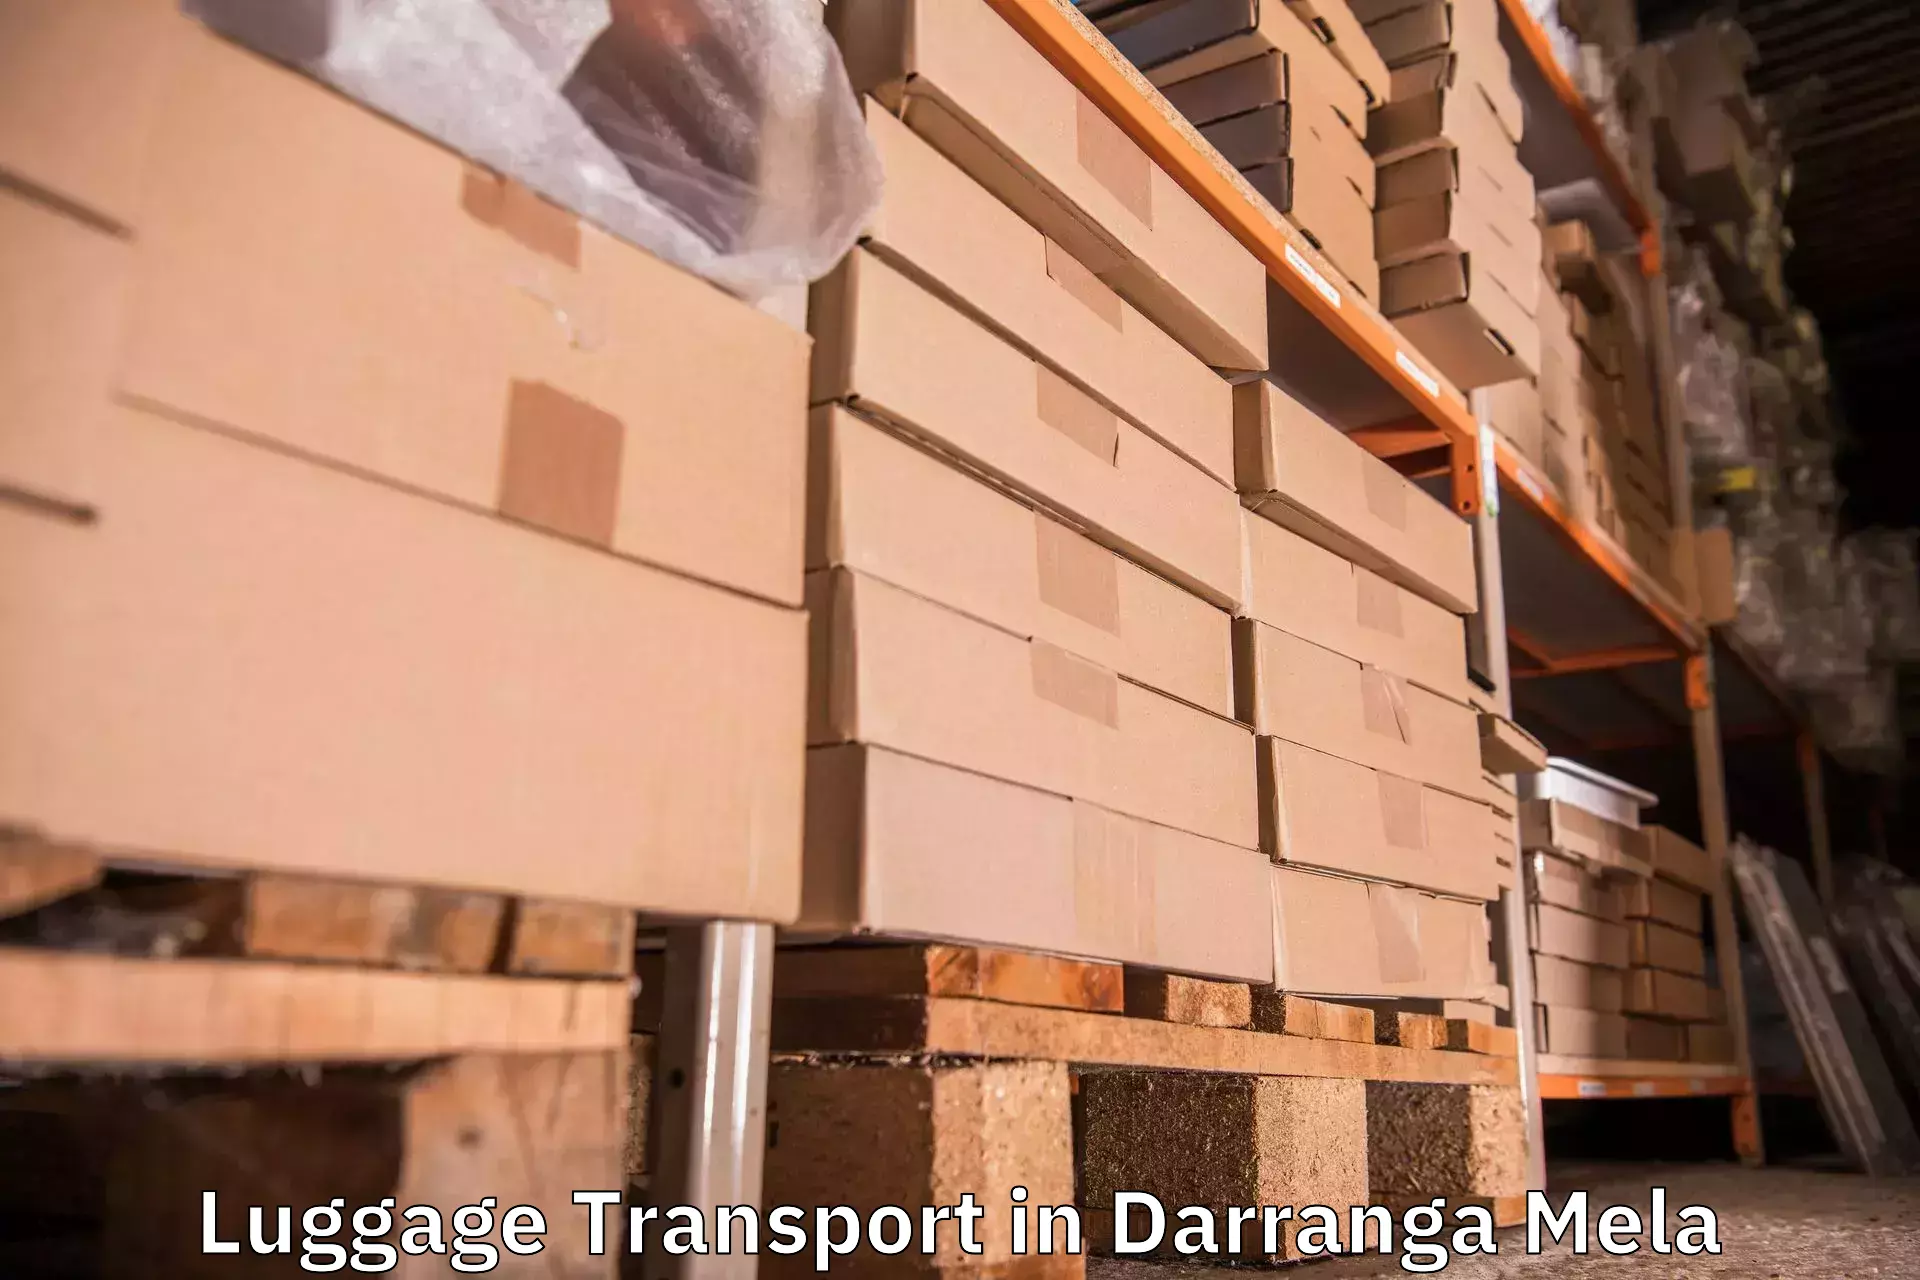 Efficient luggage delivery in Darranga Mela